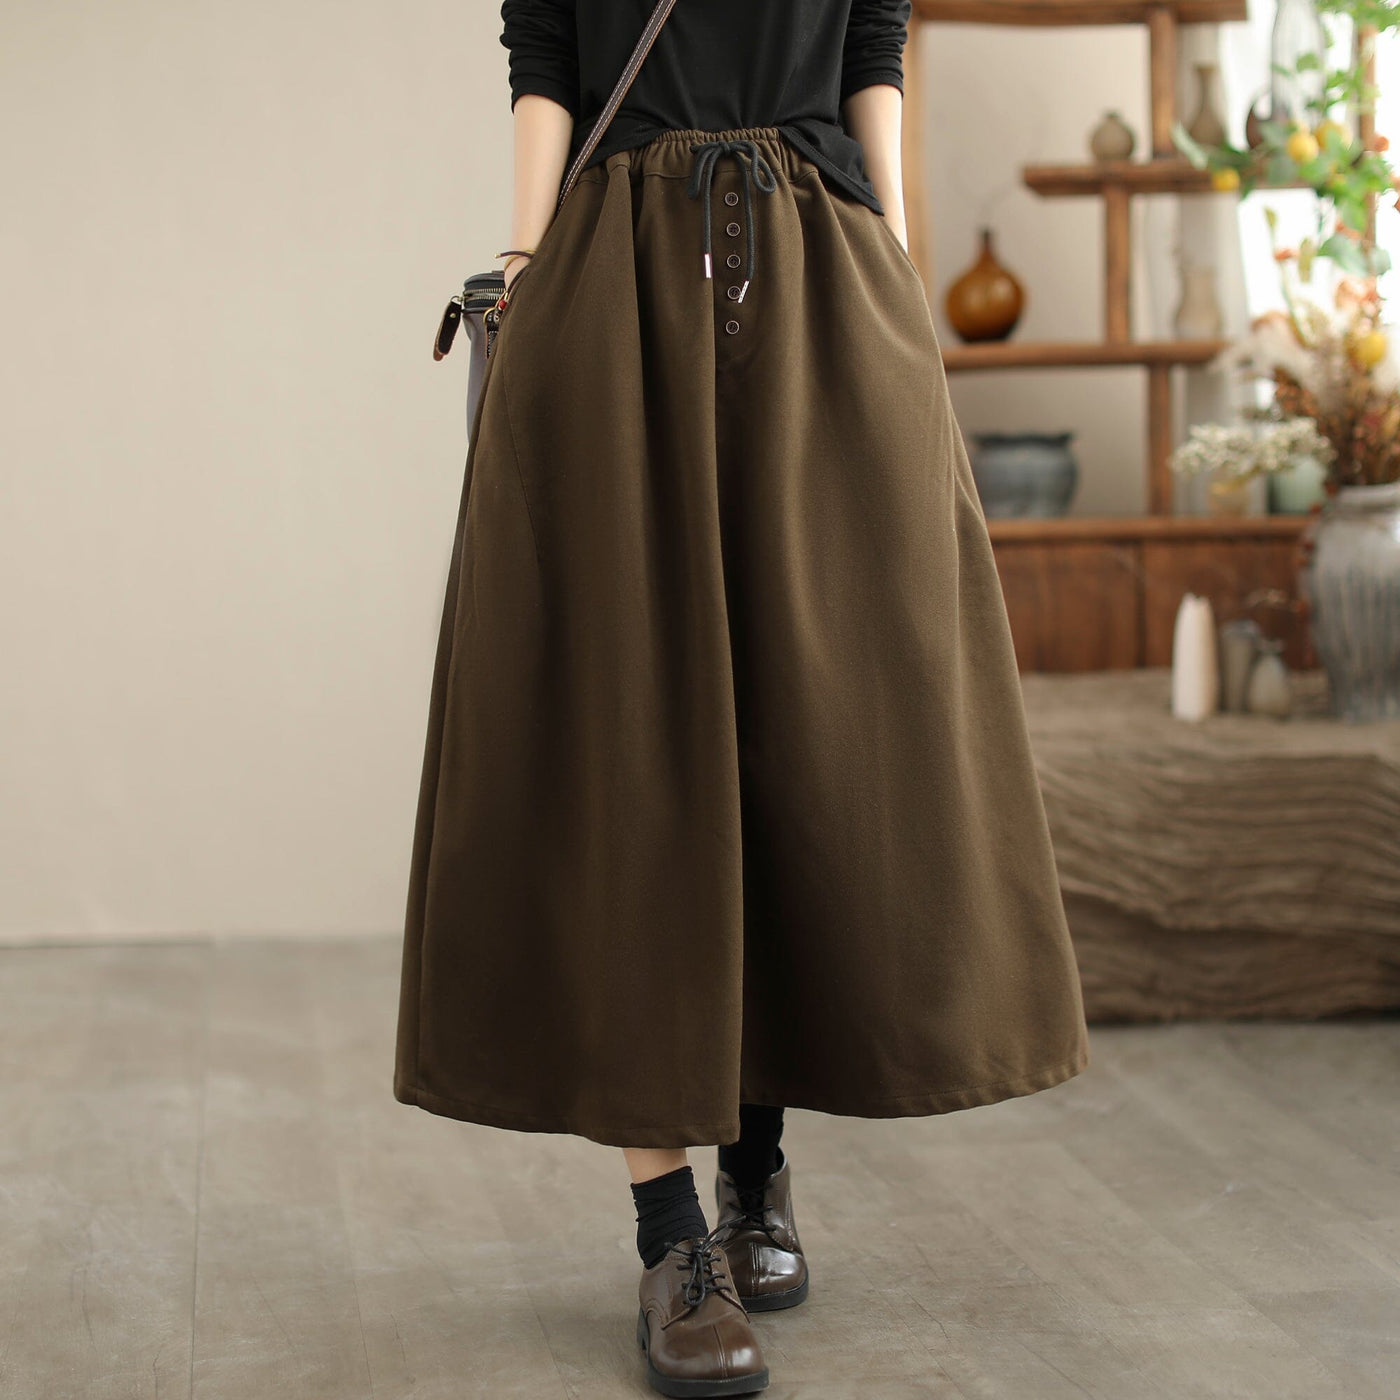 Autumn Winter Minimalist Lacing Waist A-Line Skirt